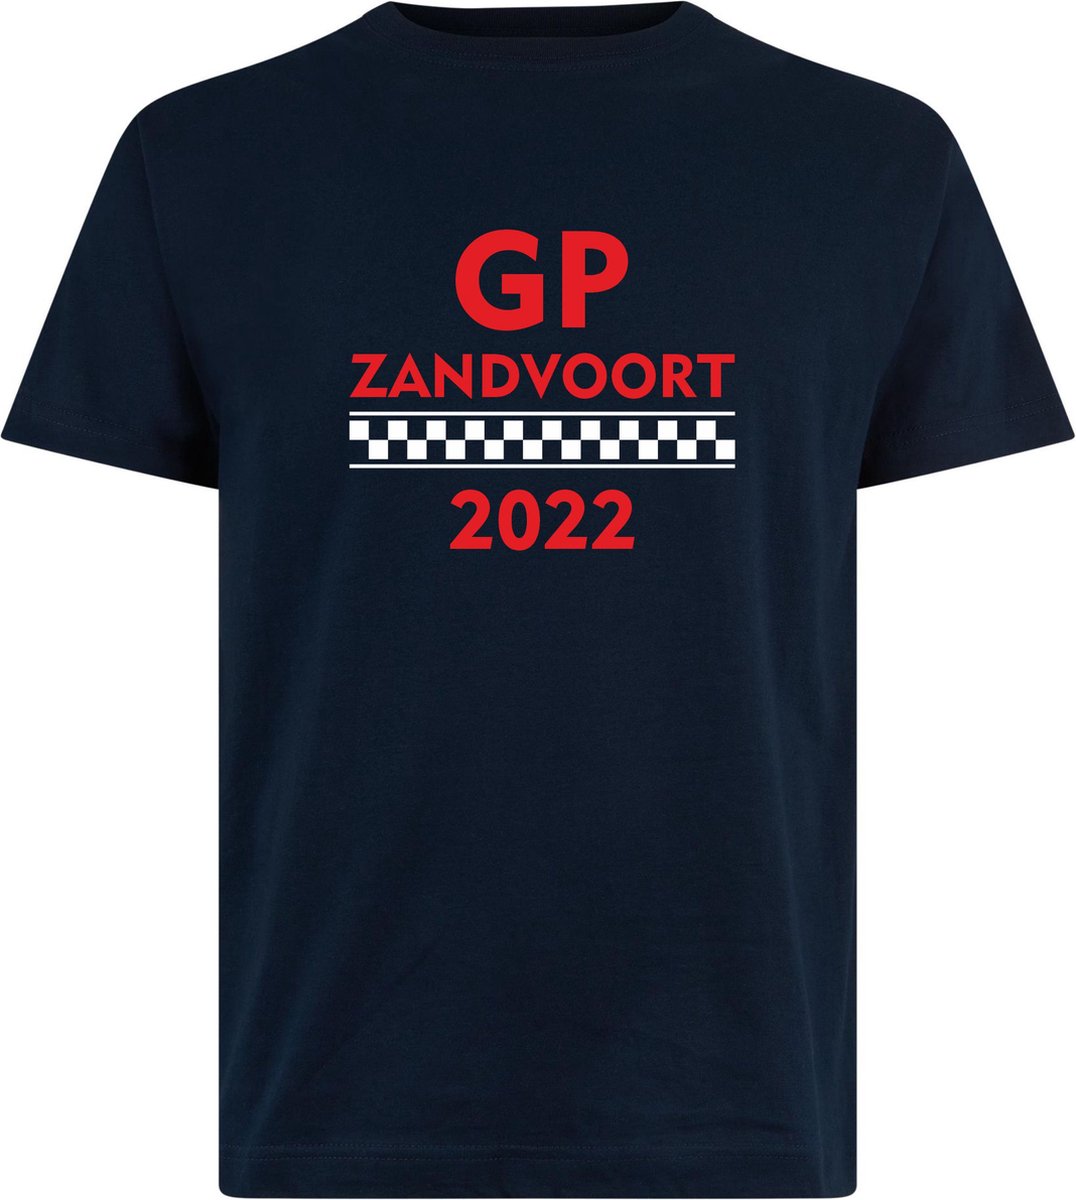 T-shirt GP Zandvoort2022 | Max Verstappen / Red Bull Racing / Formule 1 fan | Grand Prix Circuit Zandvoort | kleding shirt | Navy | maat 3XL